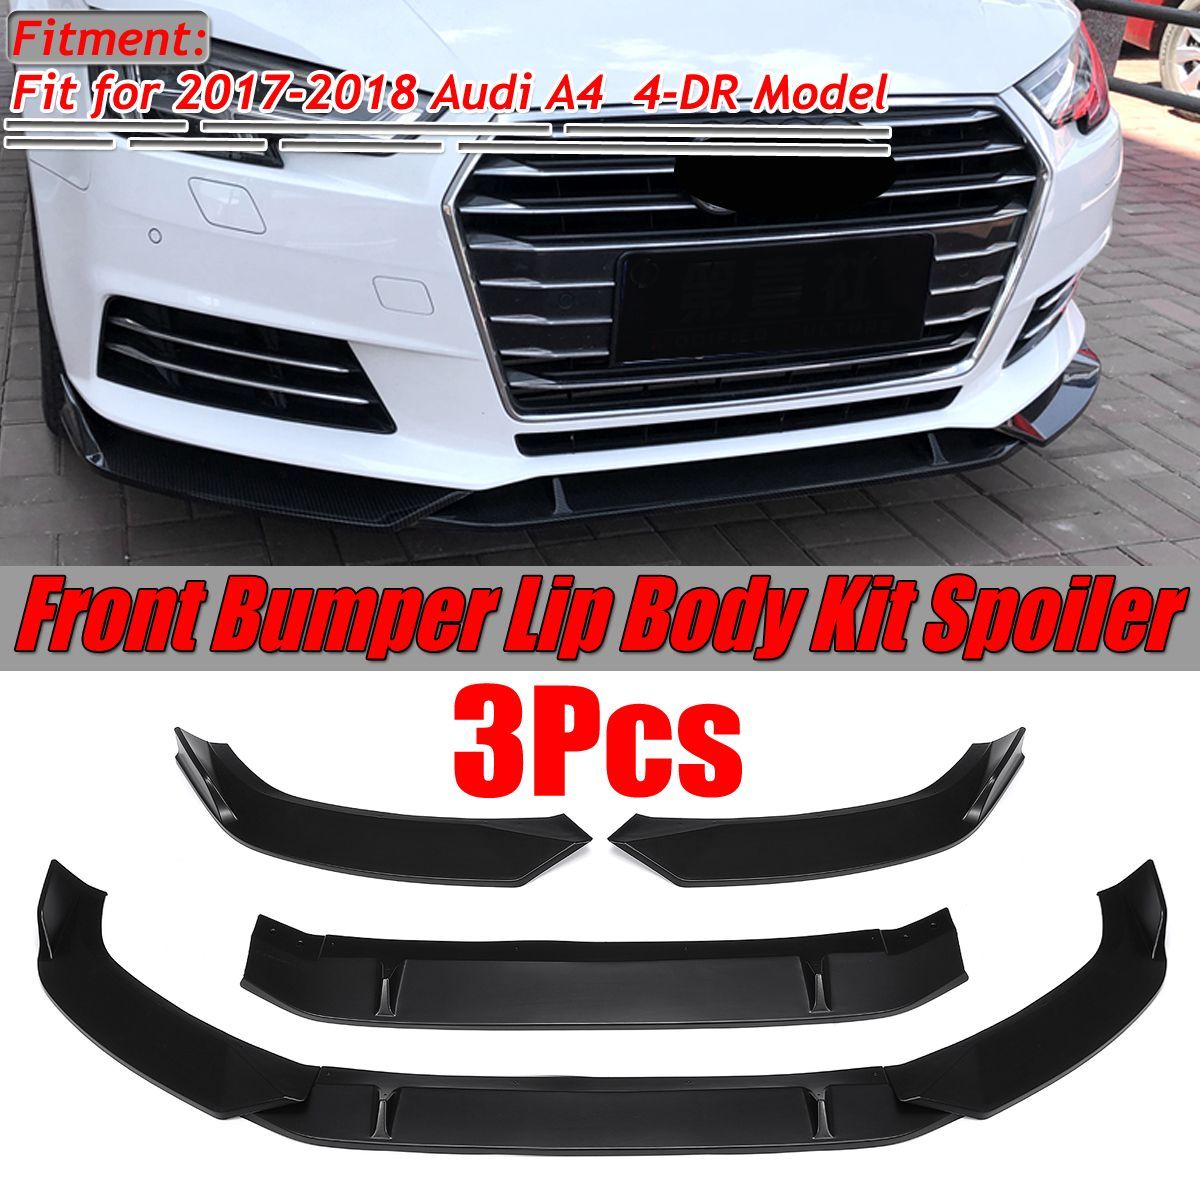 3PCS-Matte-Black-Front-Bumper-Lip-Spoiler-Cover-Trim-Set-for-Audi-A4--4-Door-Model-2017-2018-1664105